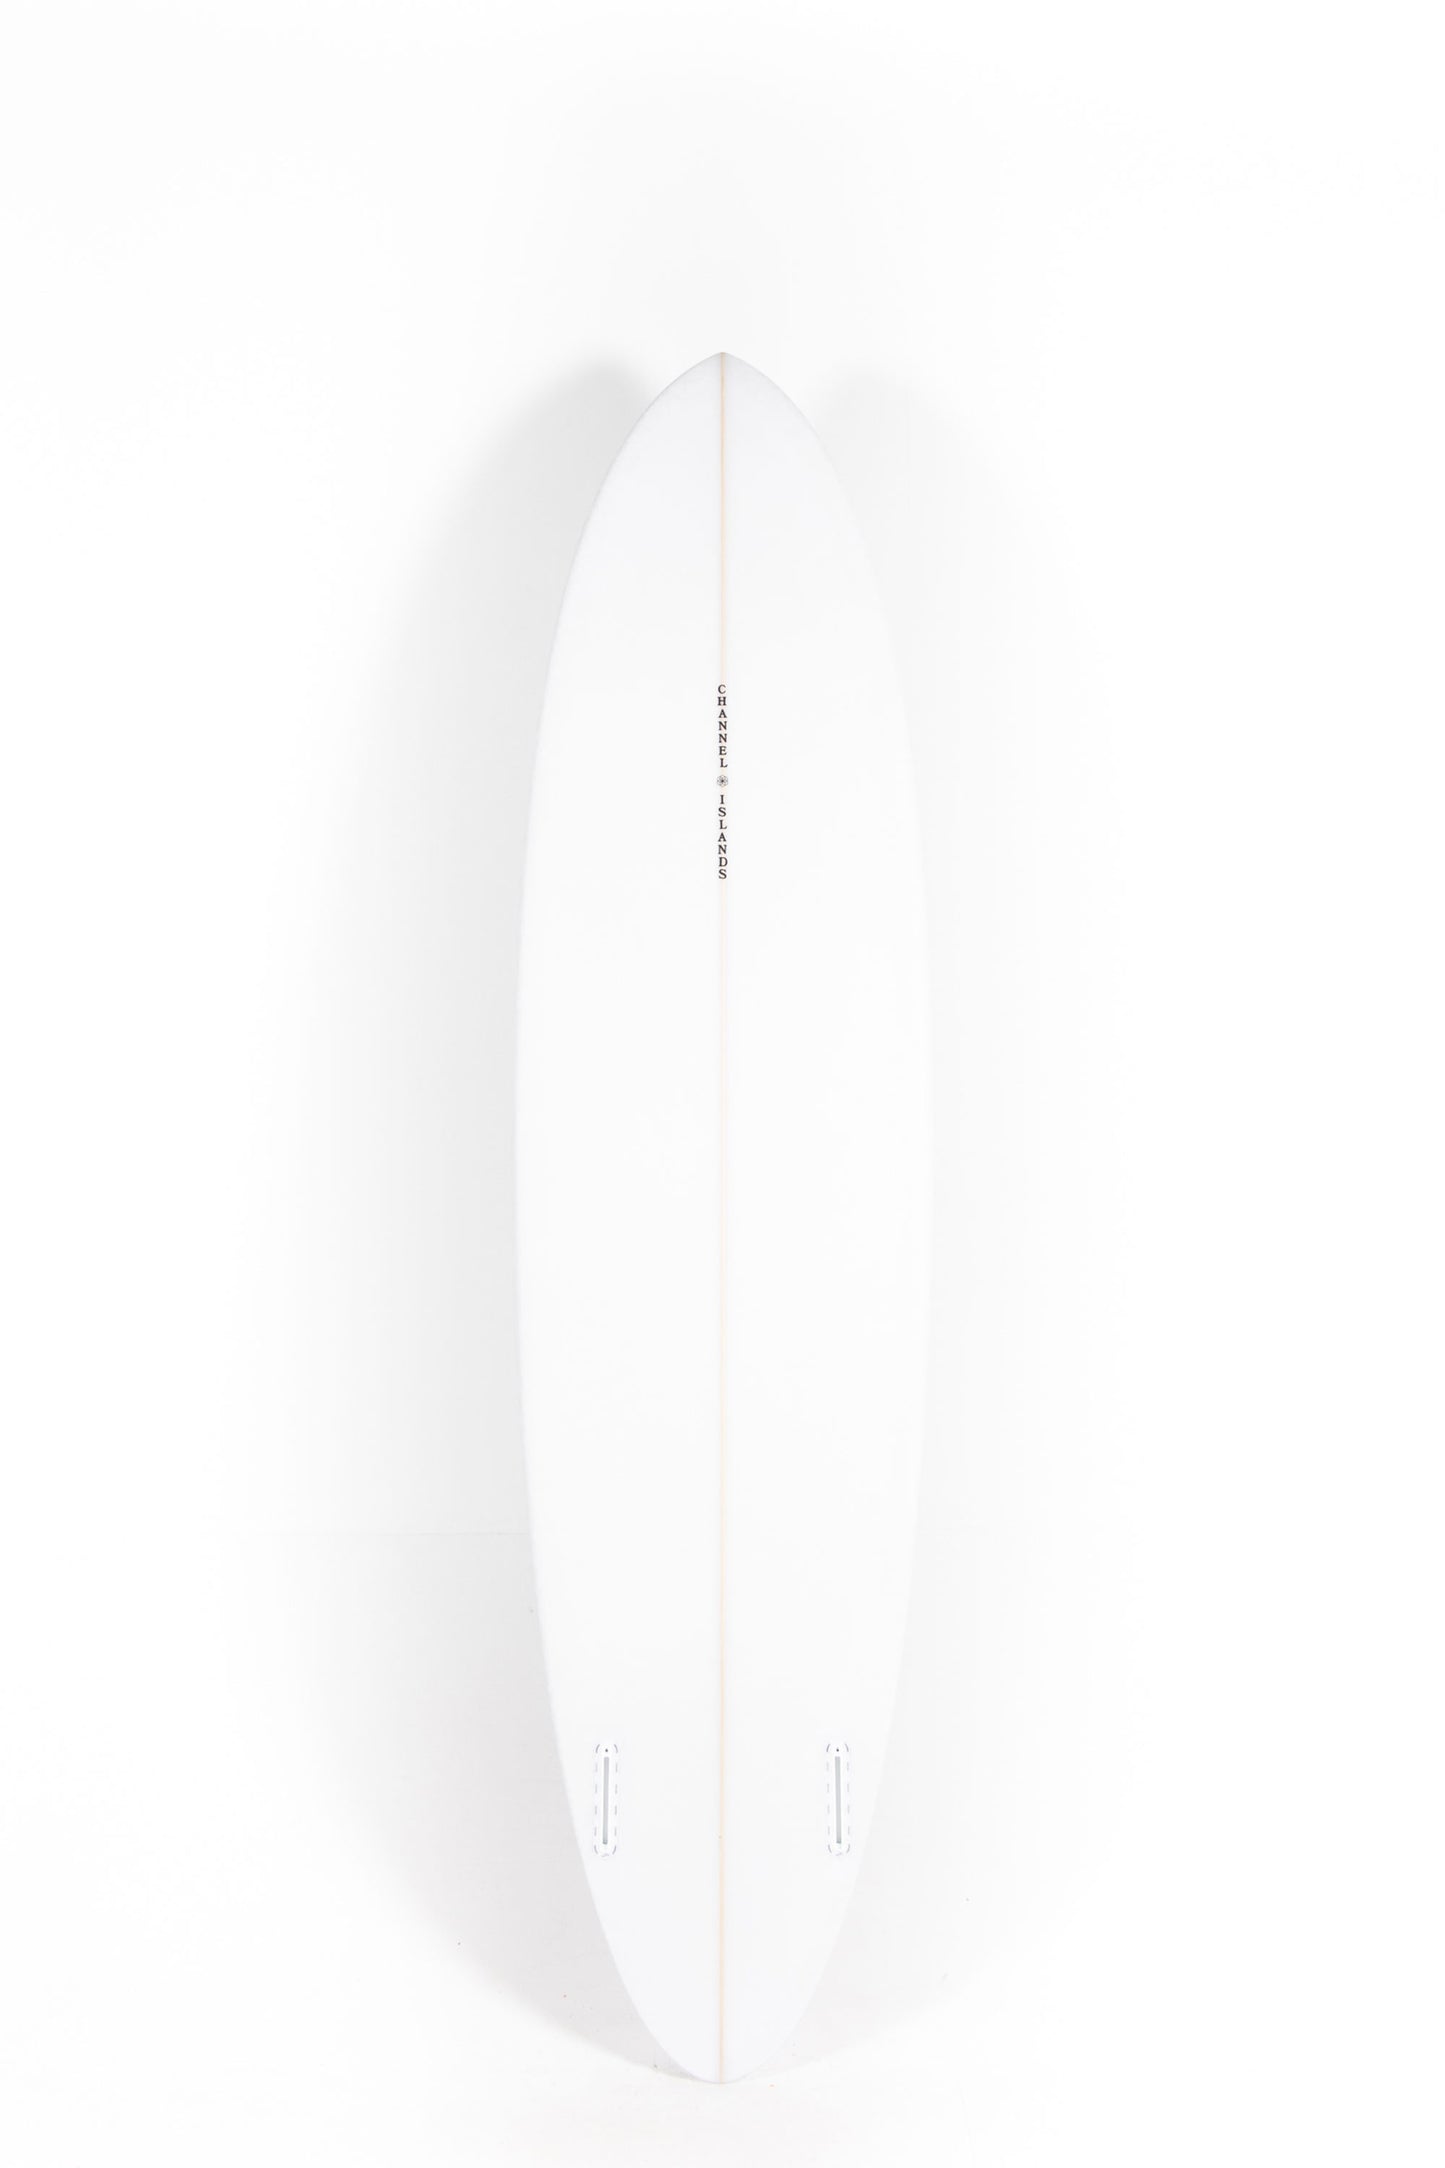 Pukas Surf Shop -  Channel Islands - CI MID TWIN - 7'6" x 21 3/4 x 2 7/8 - 51.80L - CI32369